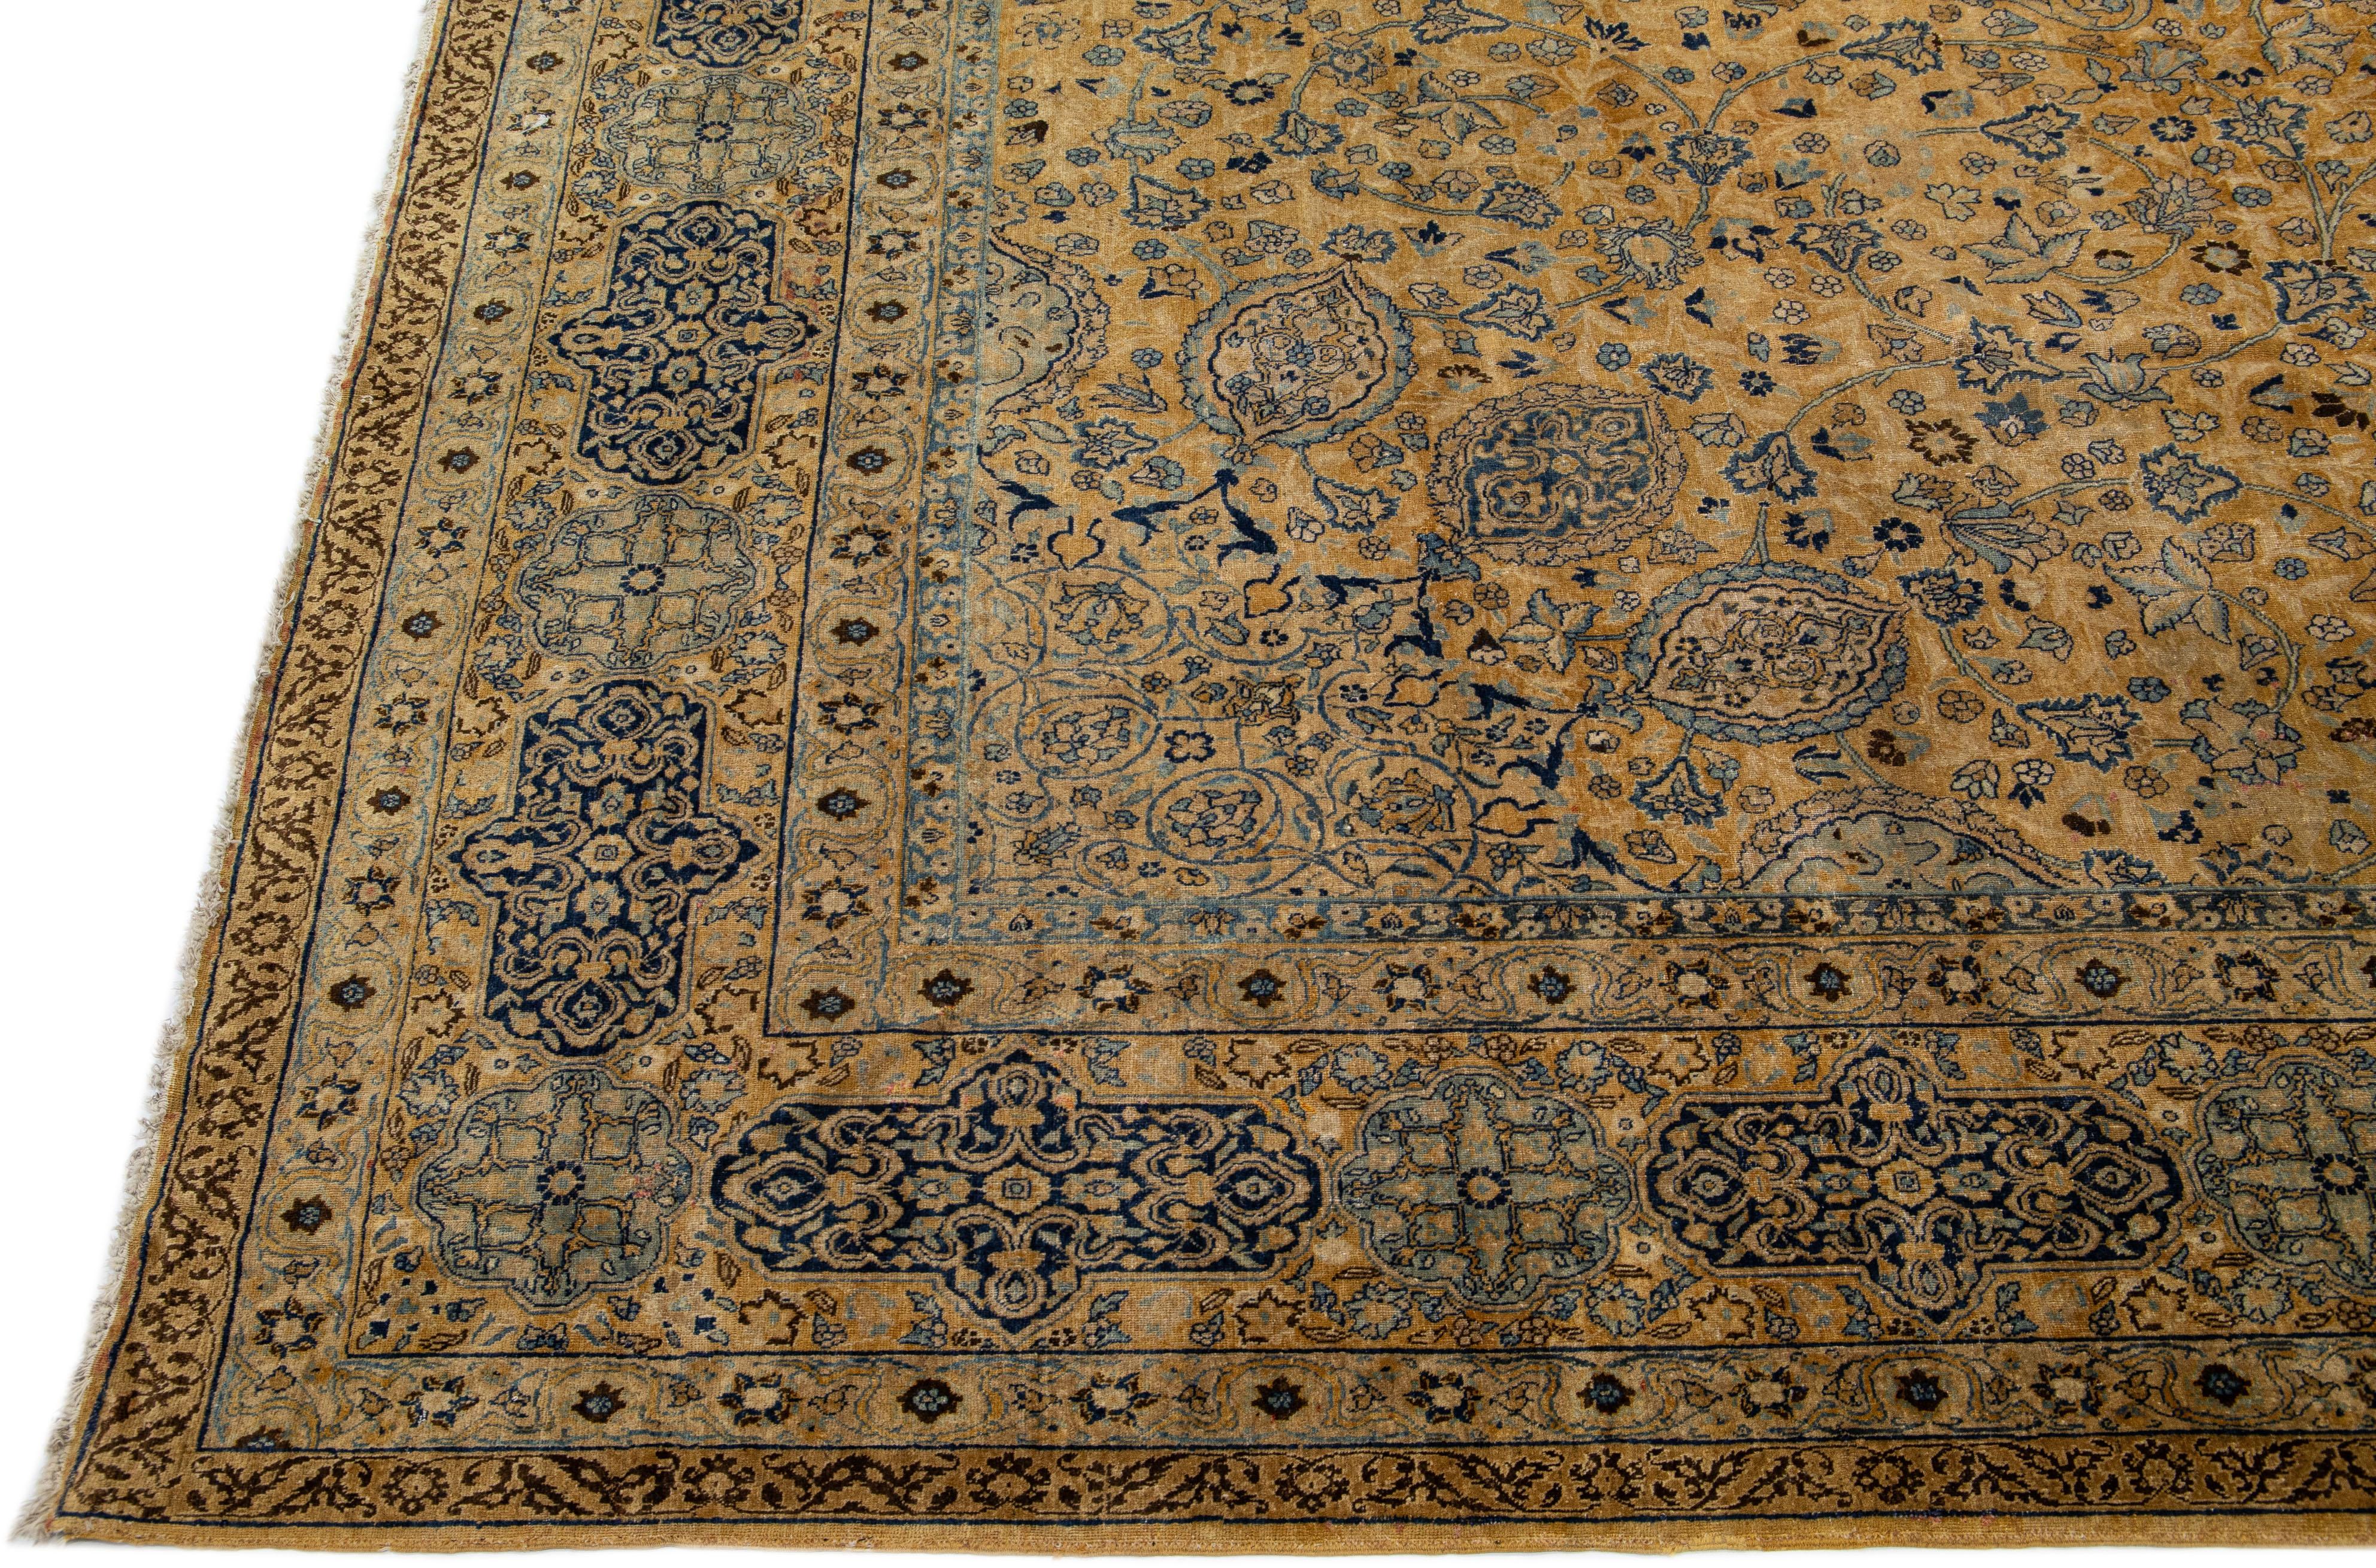 Oversize Antique Tabriz Tan Handmade Rosette Motif Persian Wool Rug In Excellent Condition For Sale In Norwalk, CT